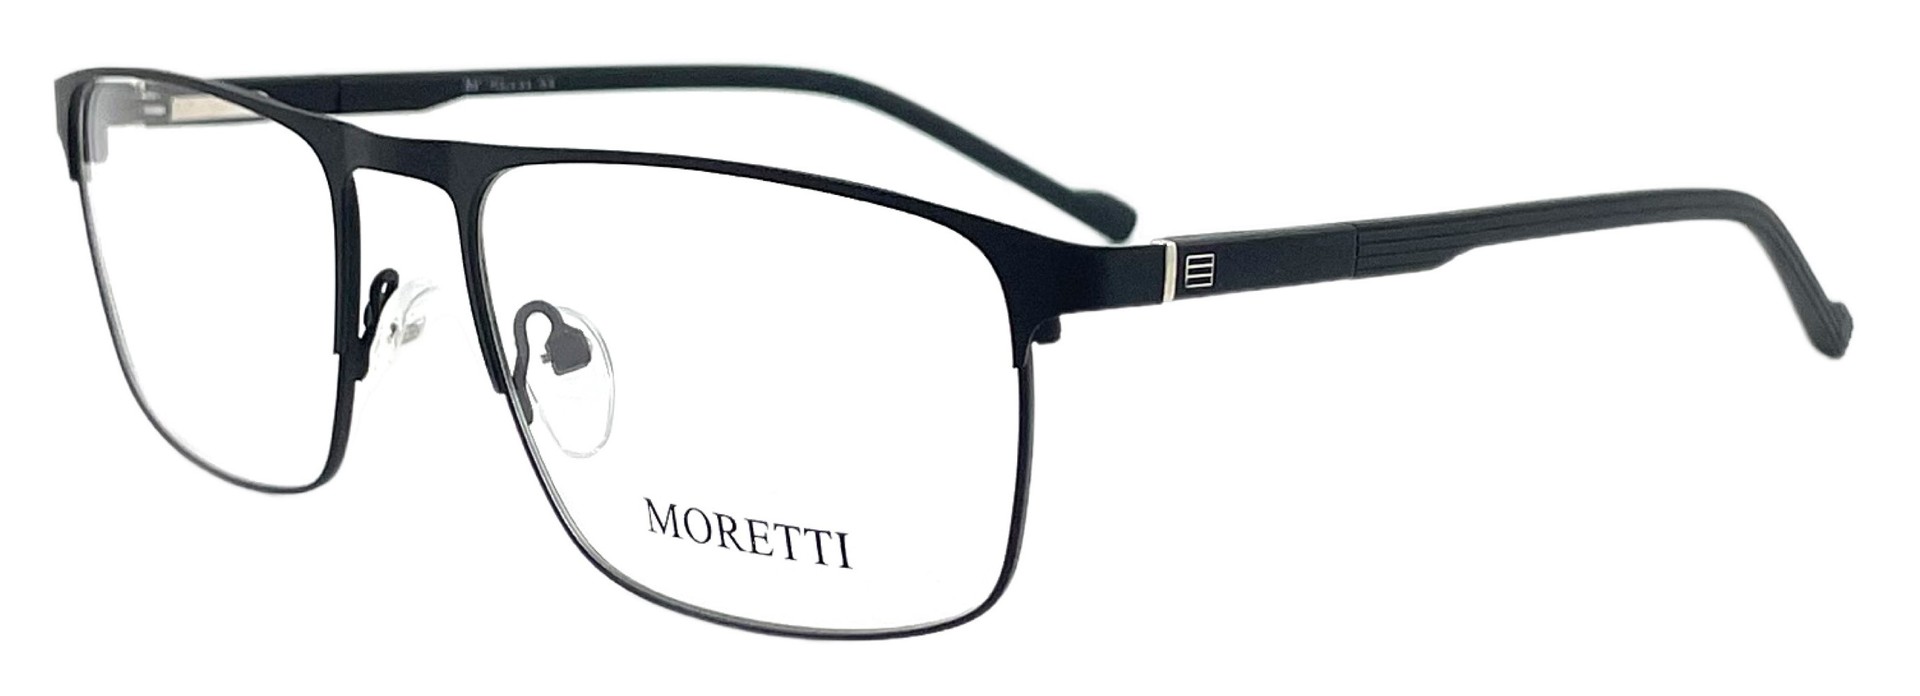 Moretti HE06-12 C1A 2